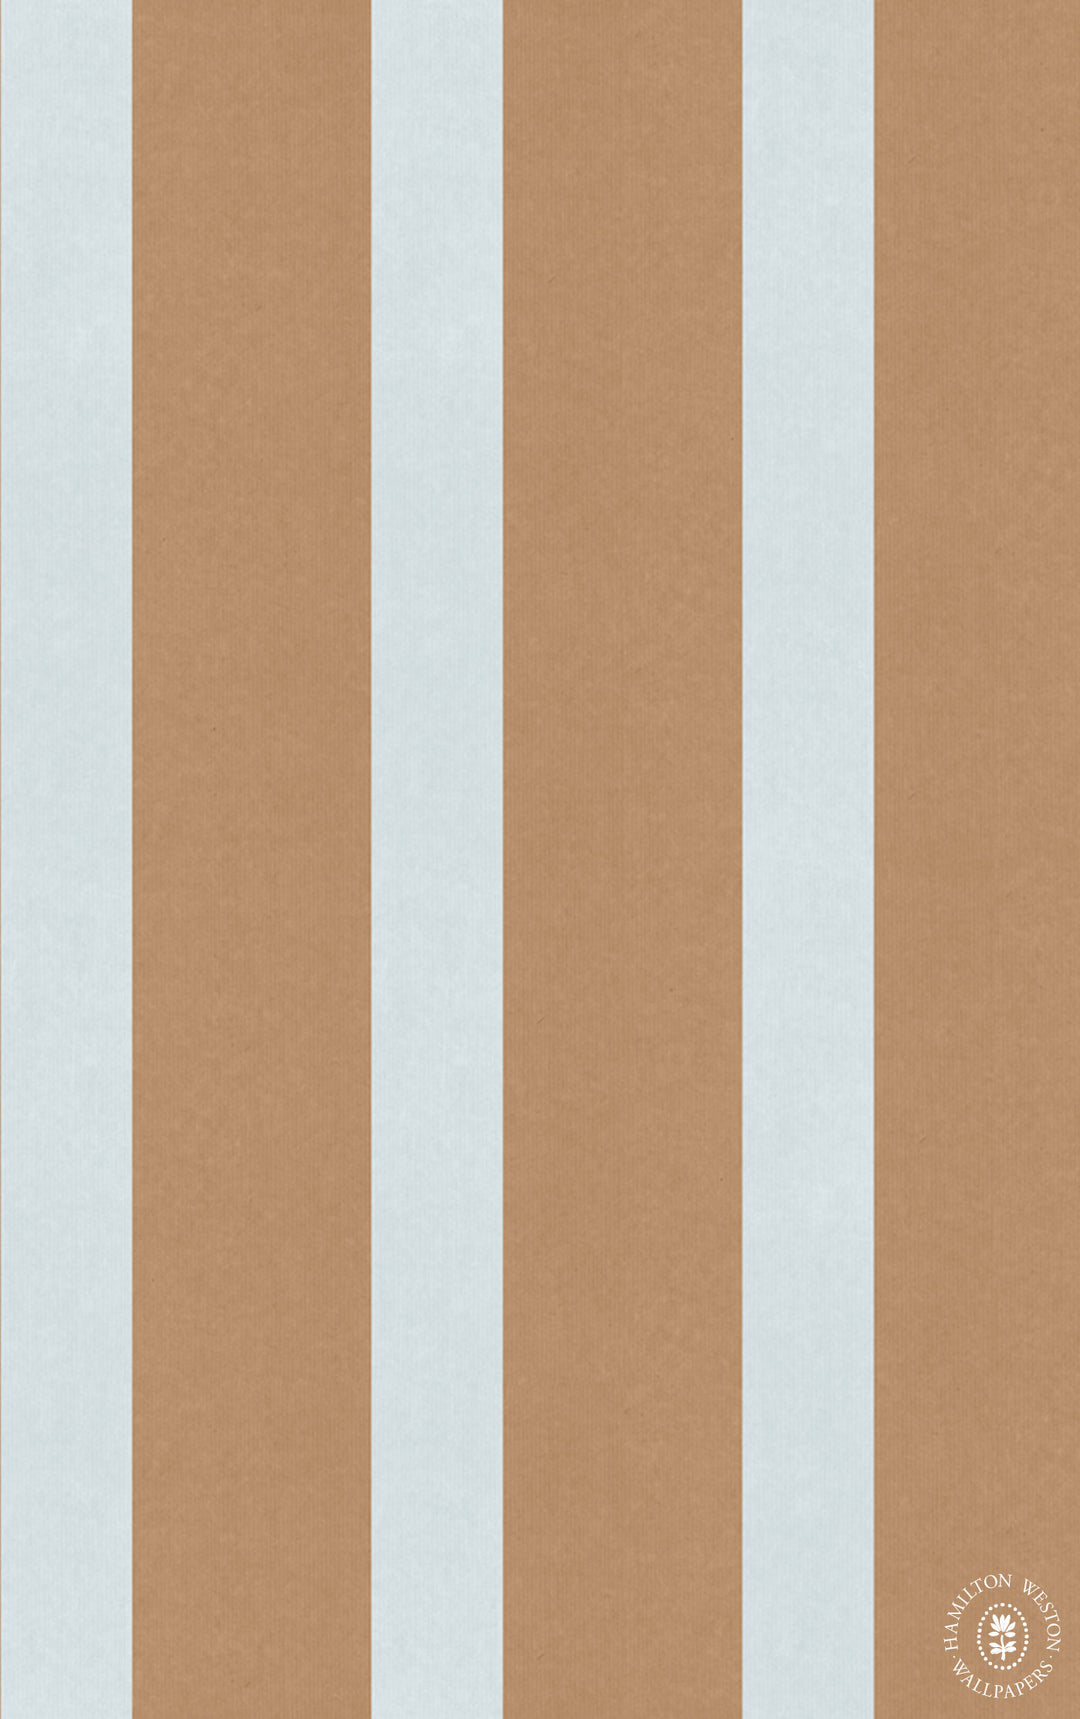 Hamilton-weston-wallpaper-adam-bray-brown-paper-stripe-collection-brown-stripe-wallpaper-british-collaboration-powder-blue-07Hamilton-weston-wallpaper-adam-bray-brown-paper-stripe-collection-brown-stripe-wallpaper-british-collaboration-powder-blue-07